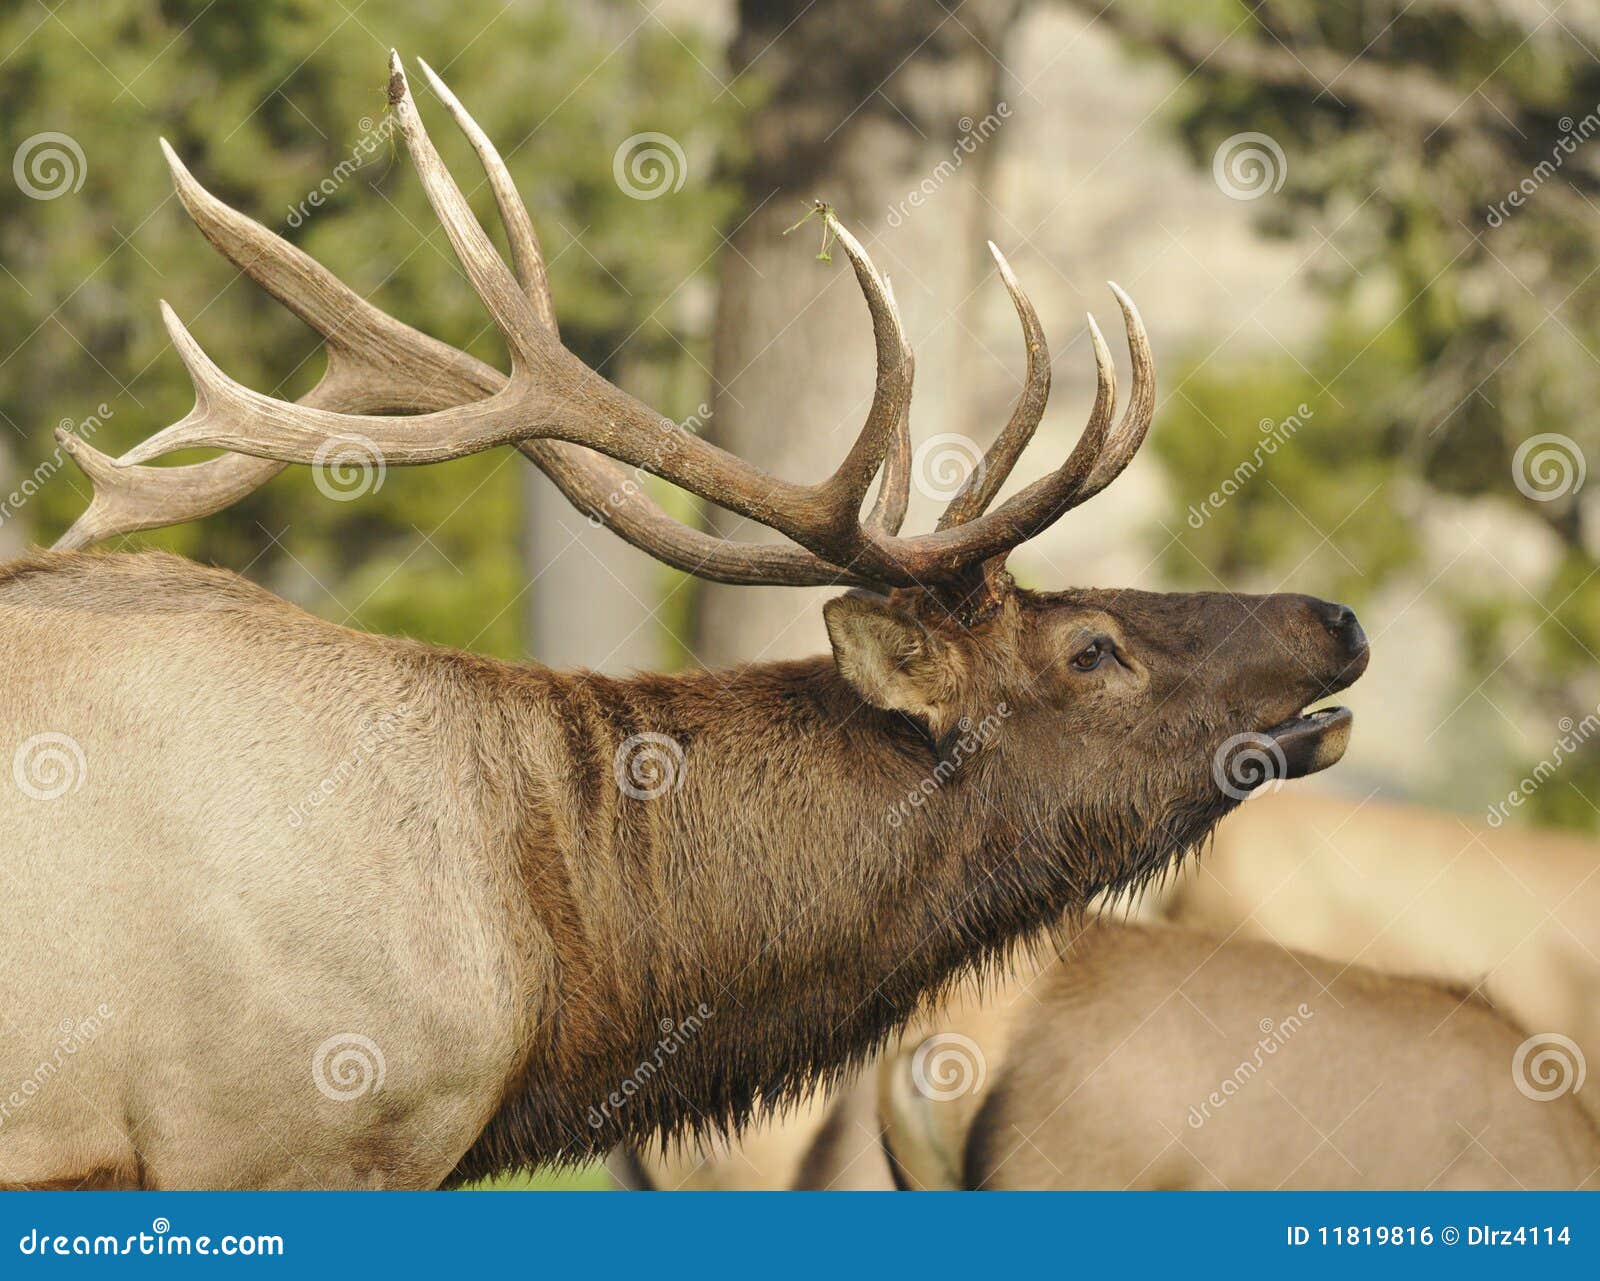 elk calling